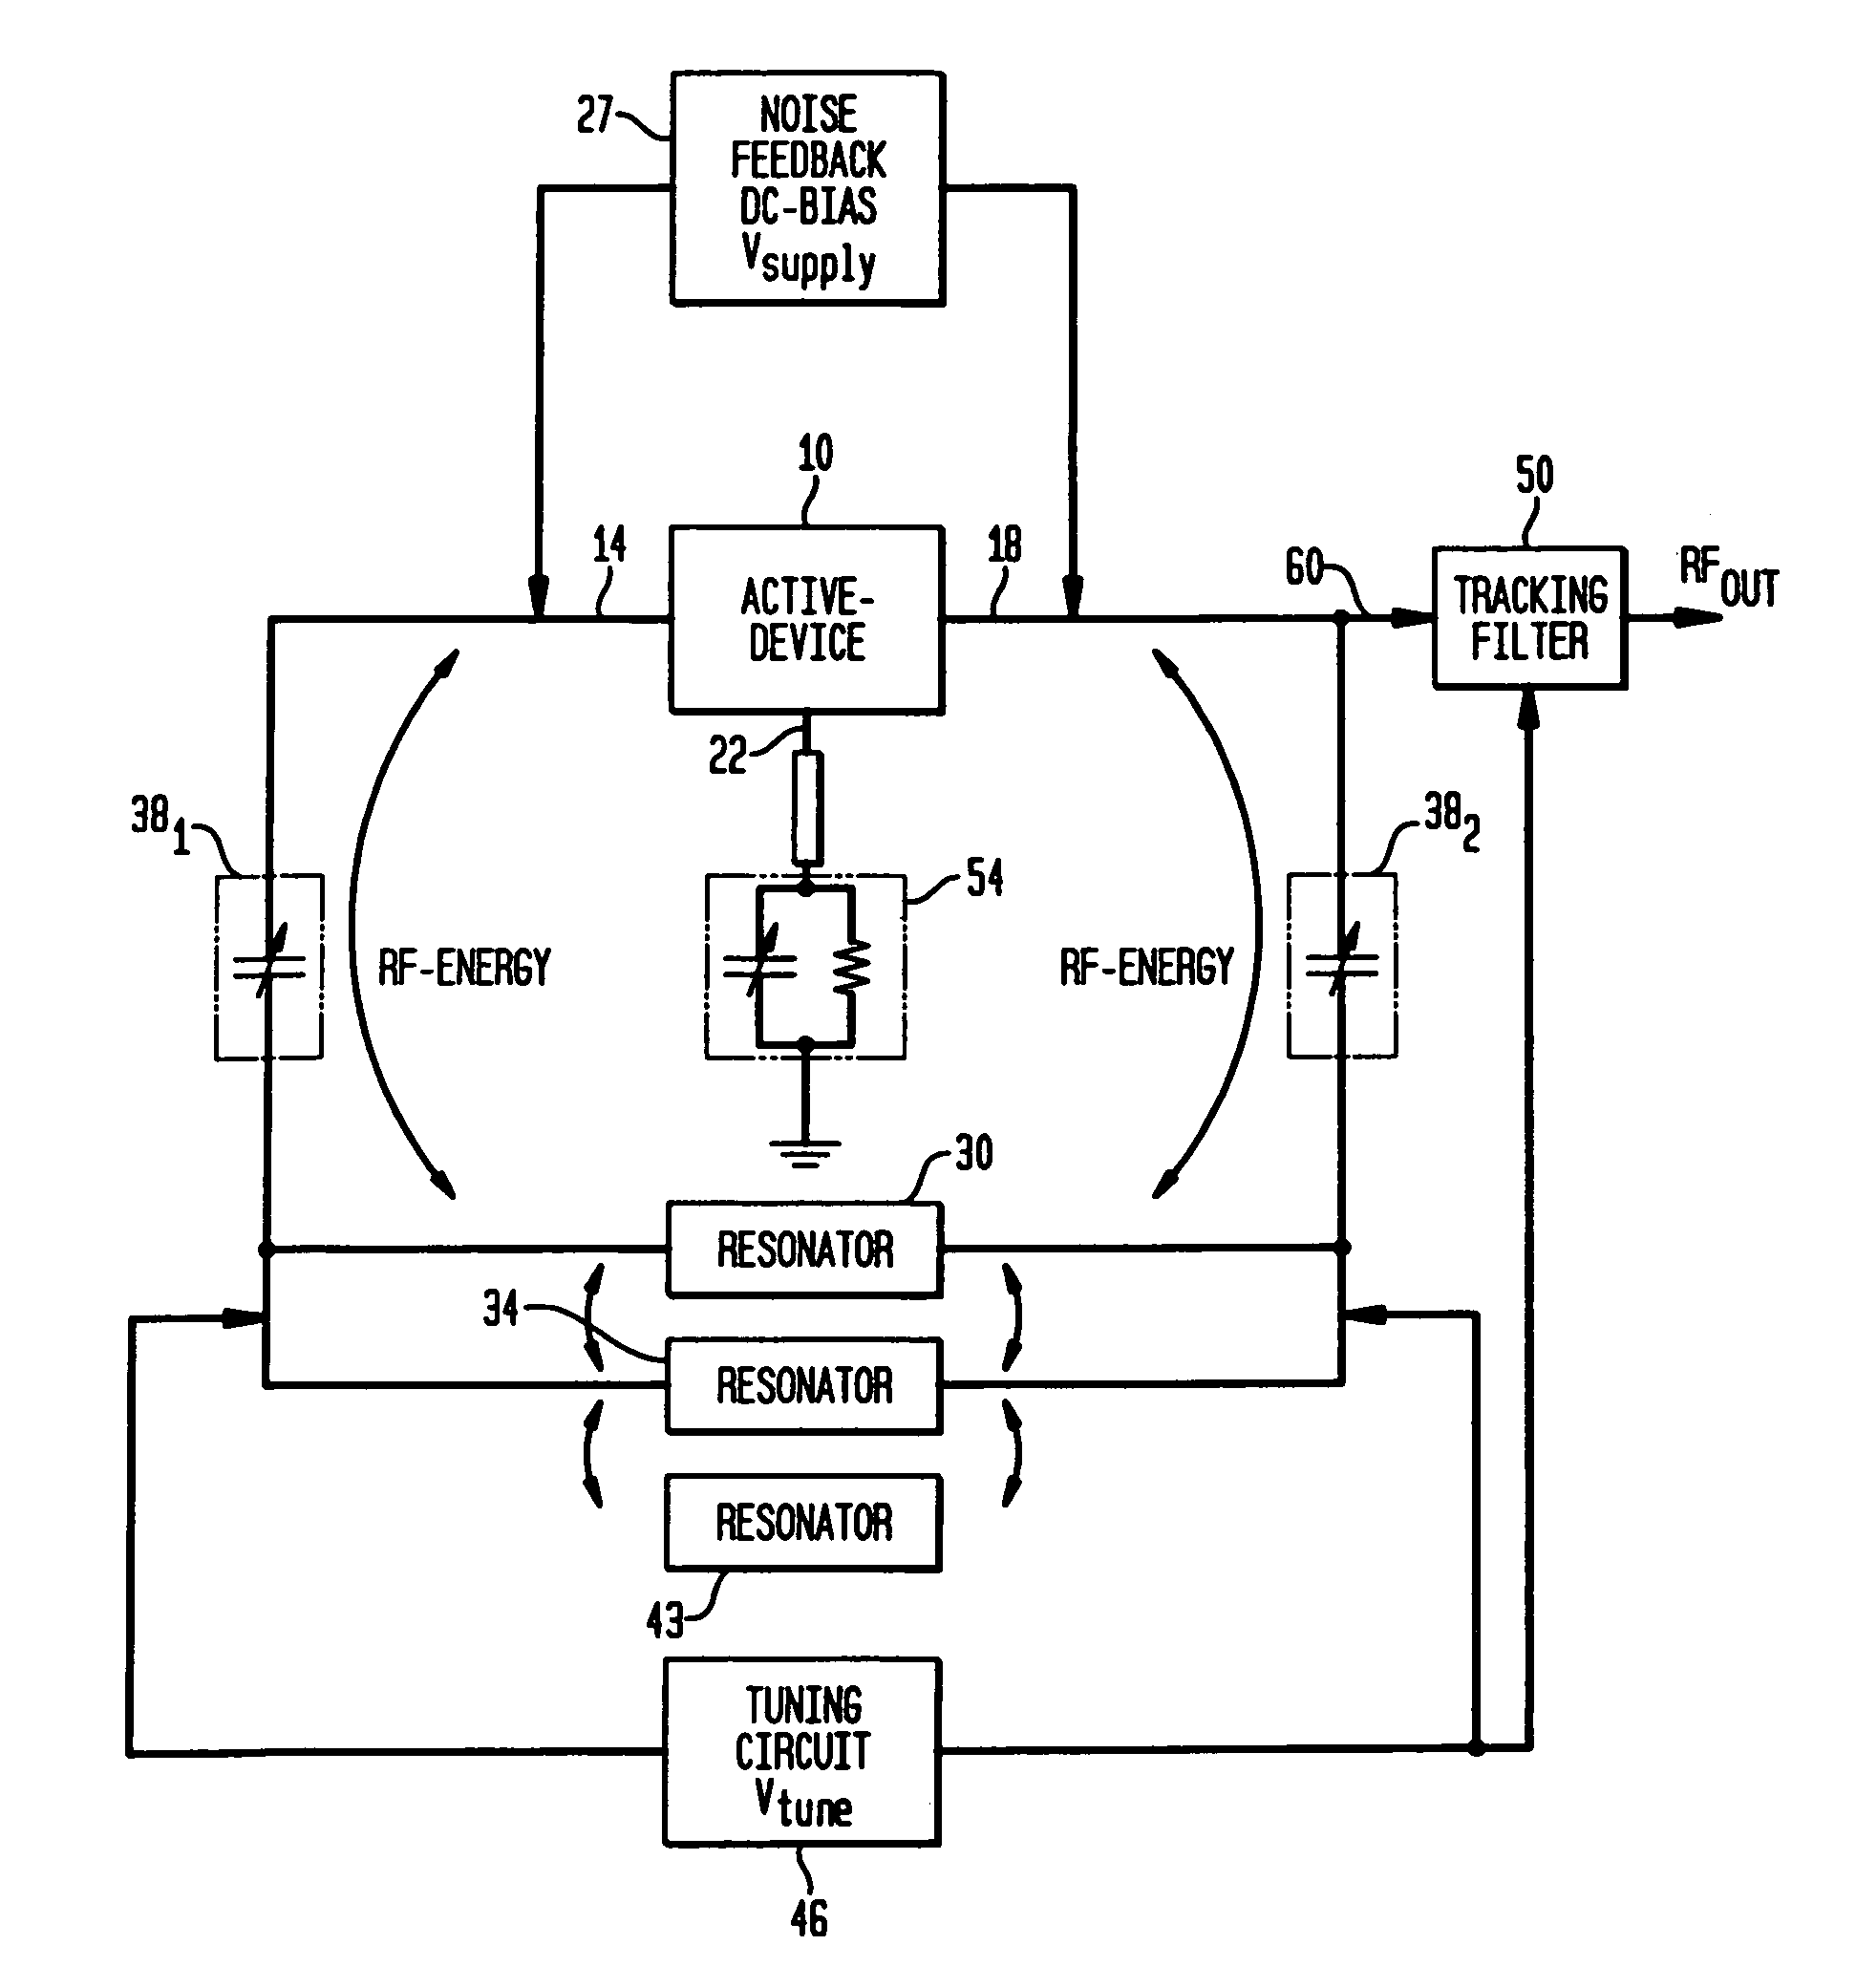 Wideband voltage controlled oscillator employing evanescent mode coupled-resonators